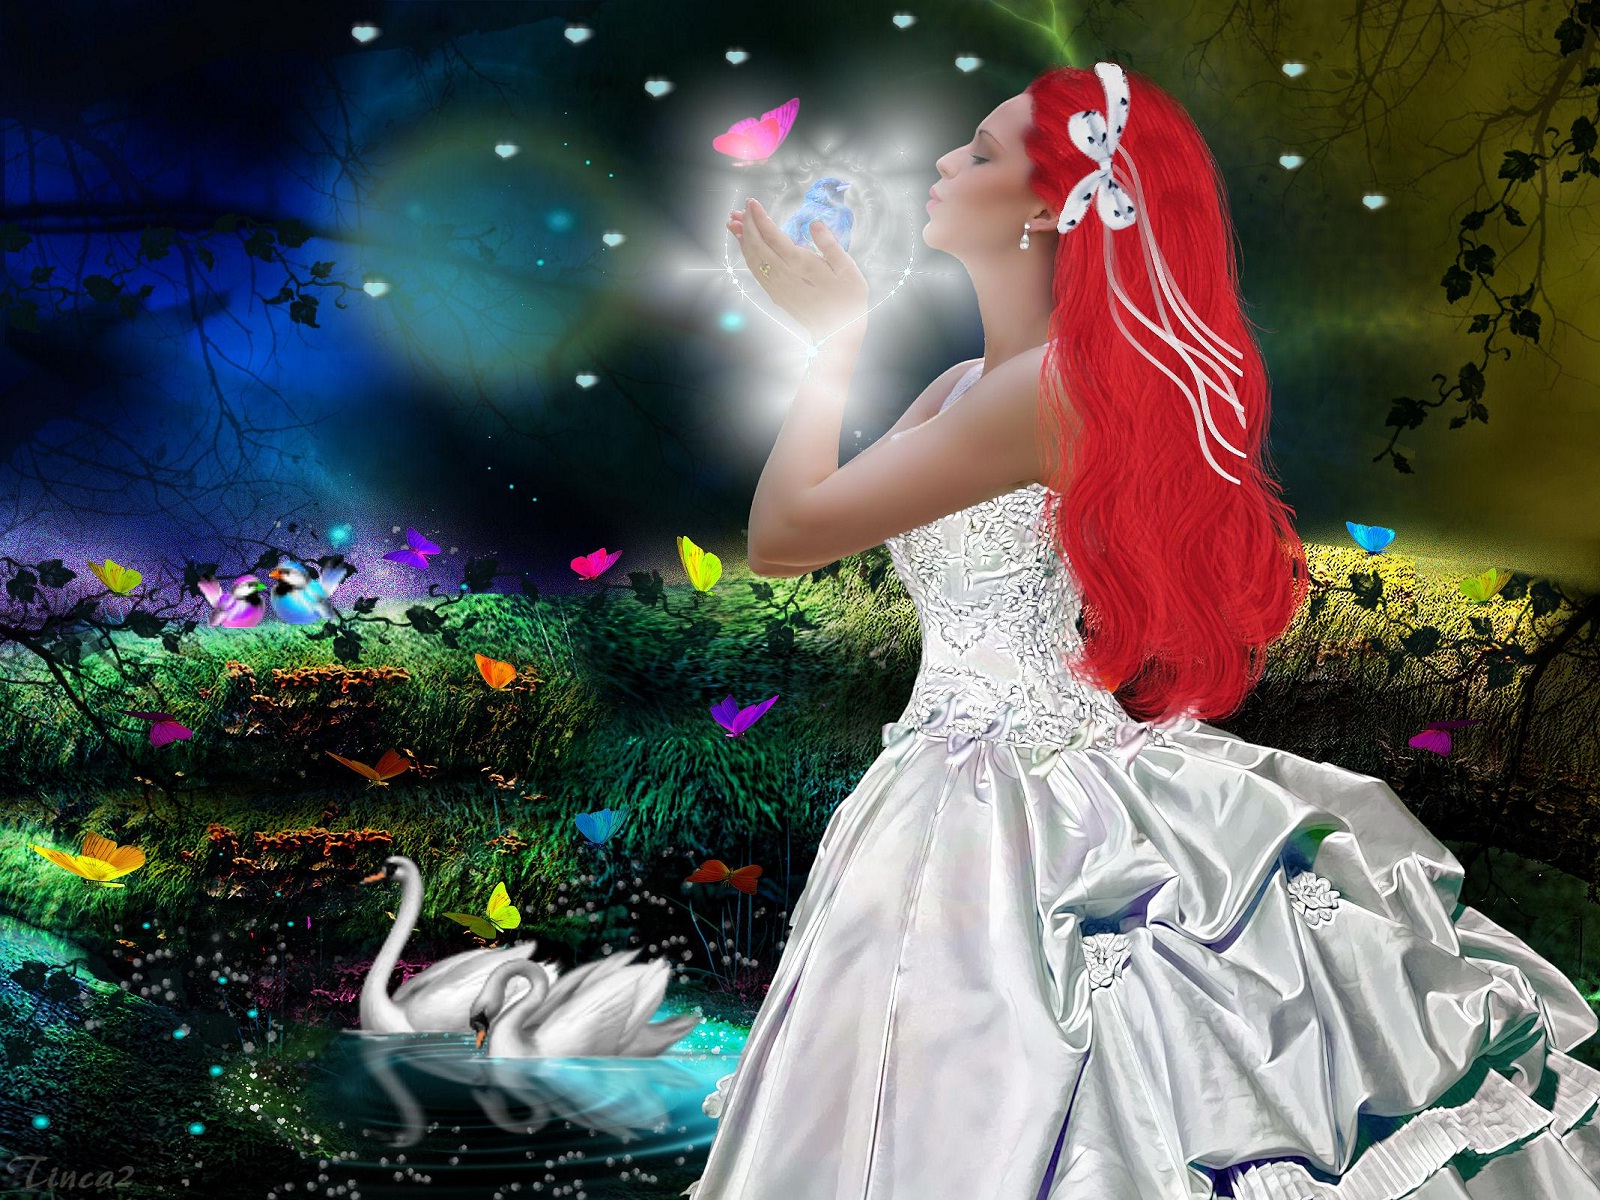 The Most Beautiful Fantasy Girl - Most Beautiful Fantasy Girl - HD Wallpaper 